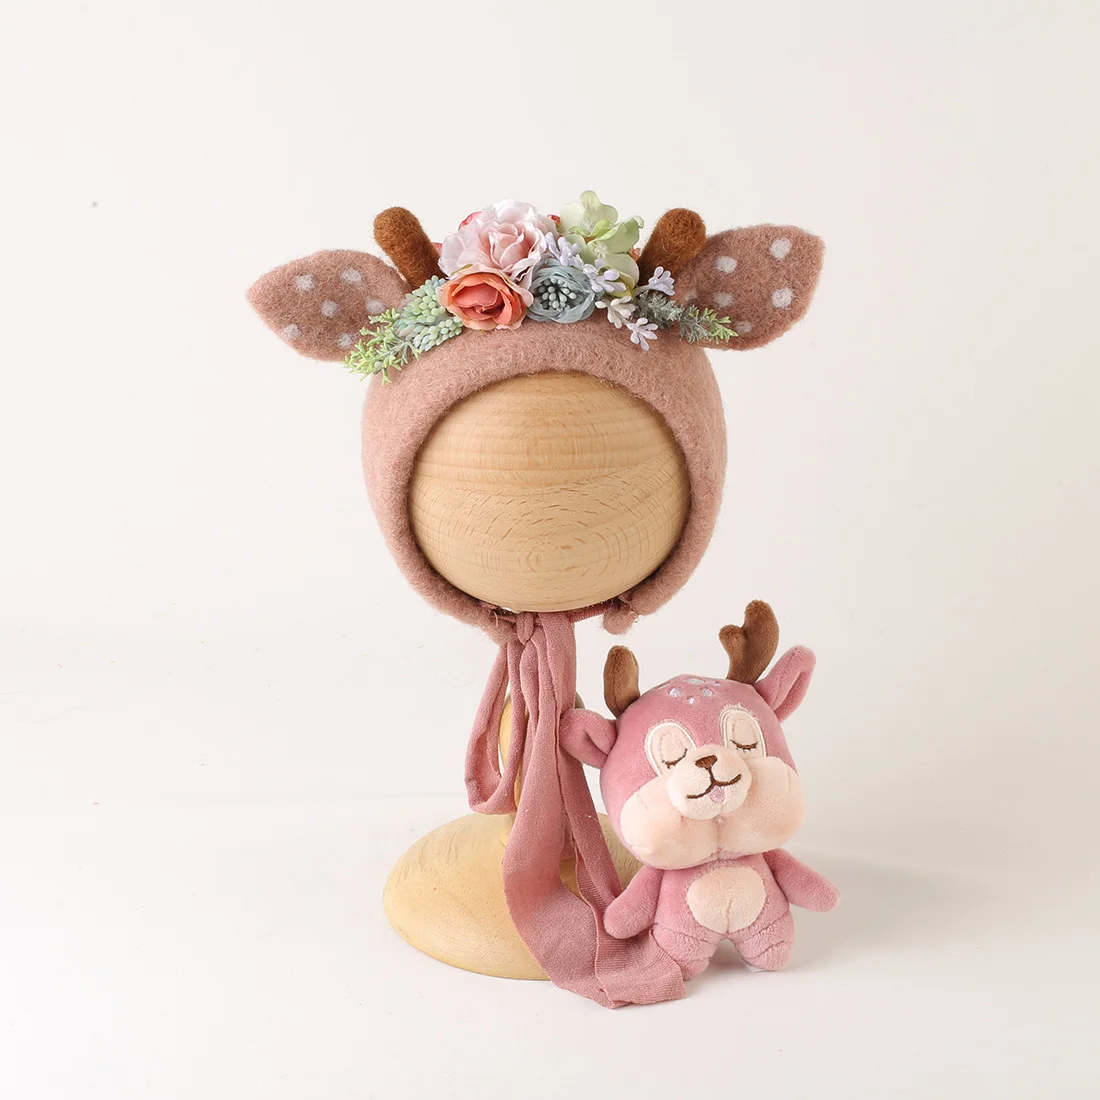 

Newborn Wool Felt Deer Floral Bonnet And Plush Toy Set Newborn Photography Prop Knitted Angora Teddy Bear Hat Toy Photo Shoot